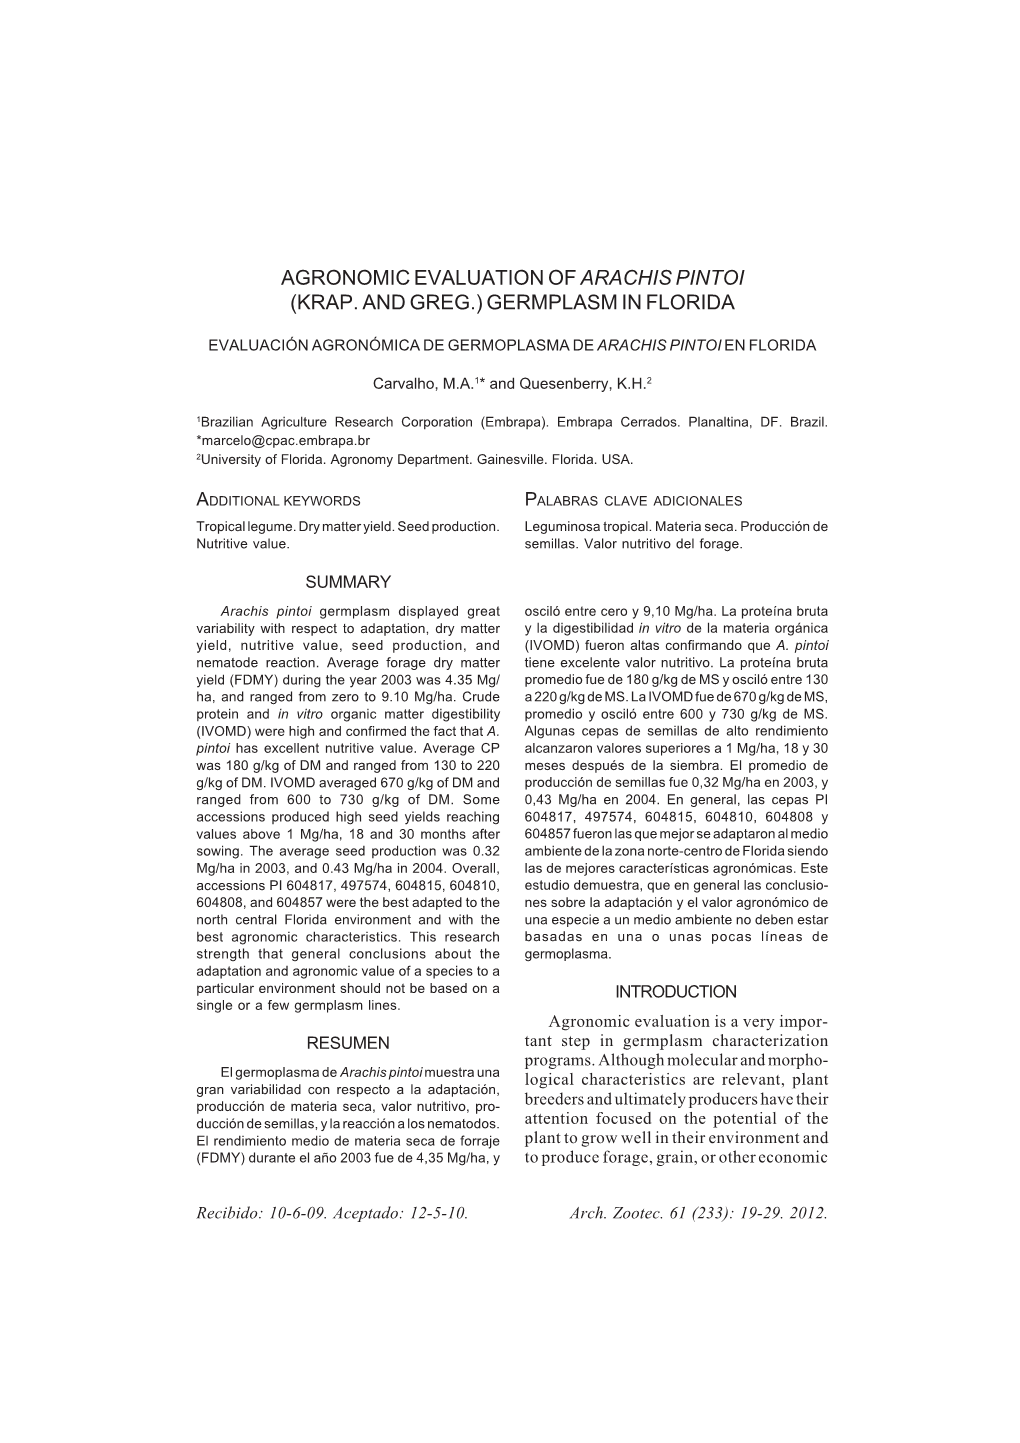 Agronomic Evaluation of Arachis Pintoi (Krap. and Greg.) Germplasm in Florida